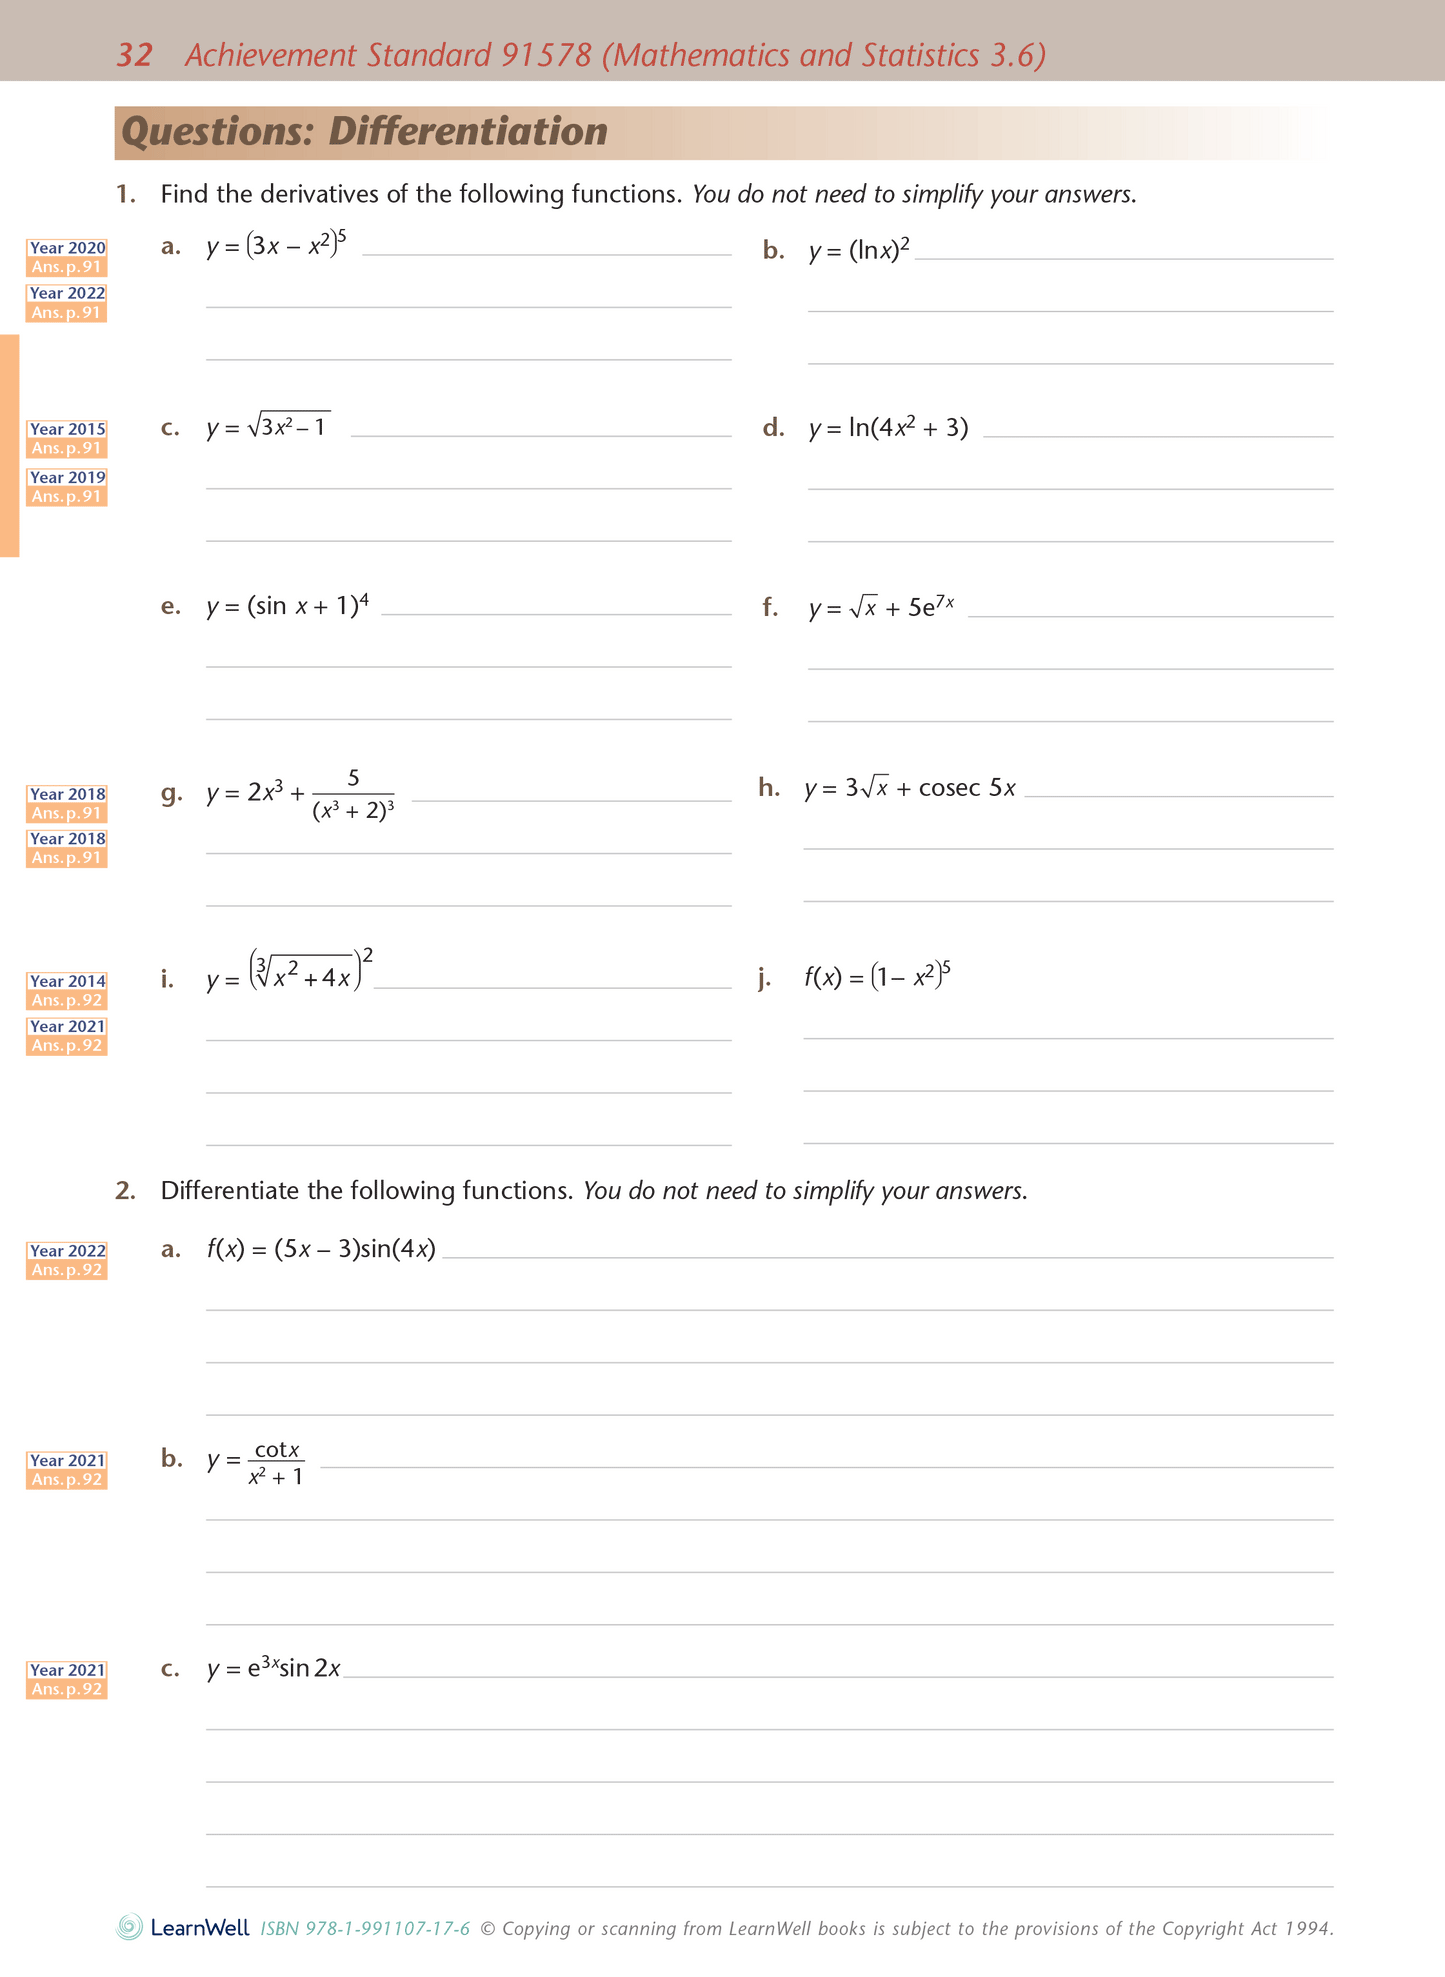 Level 3 Calculus AME Workbook